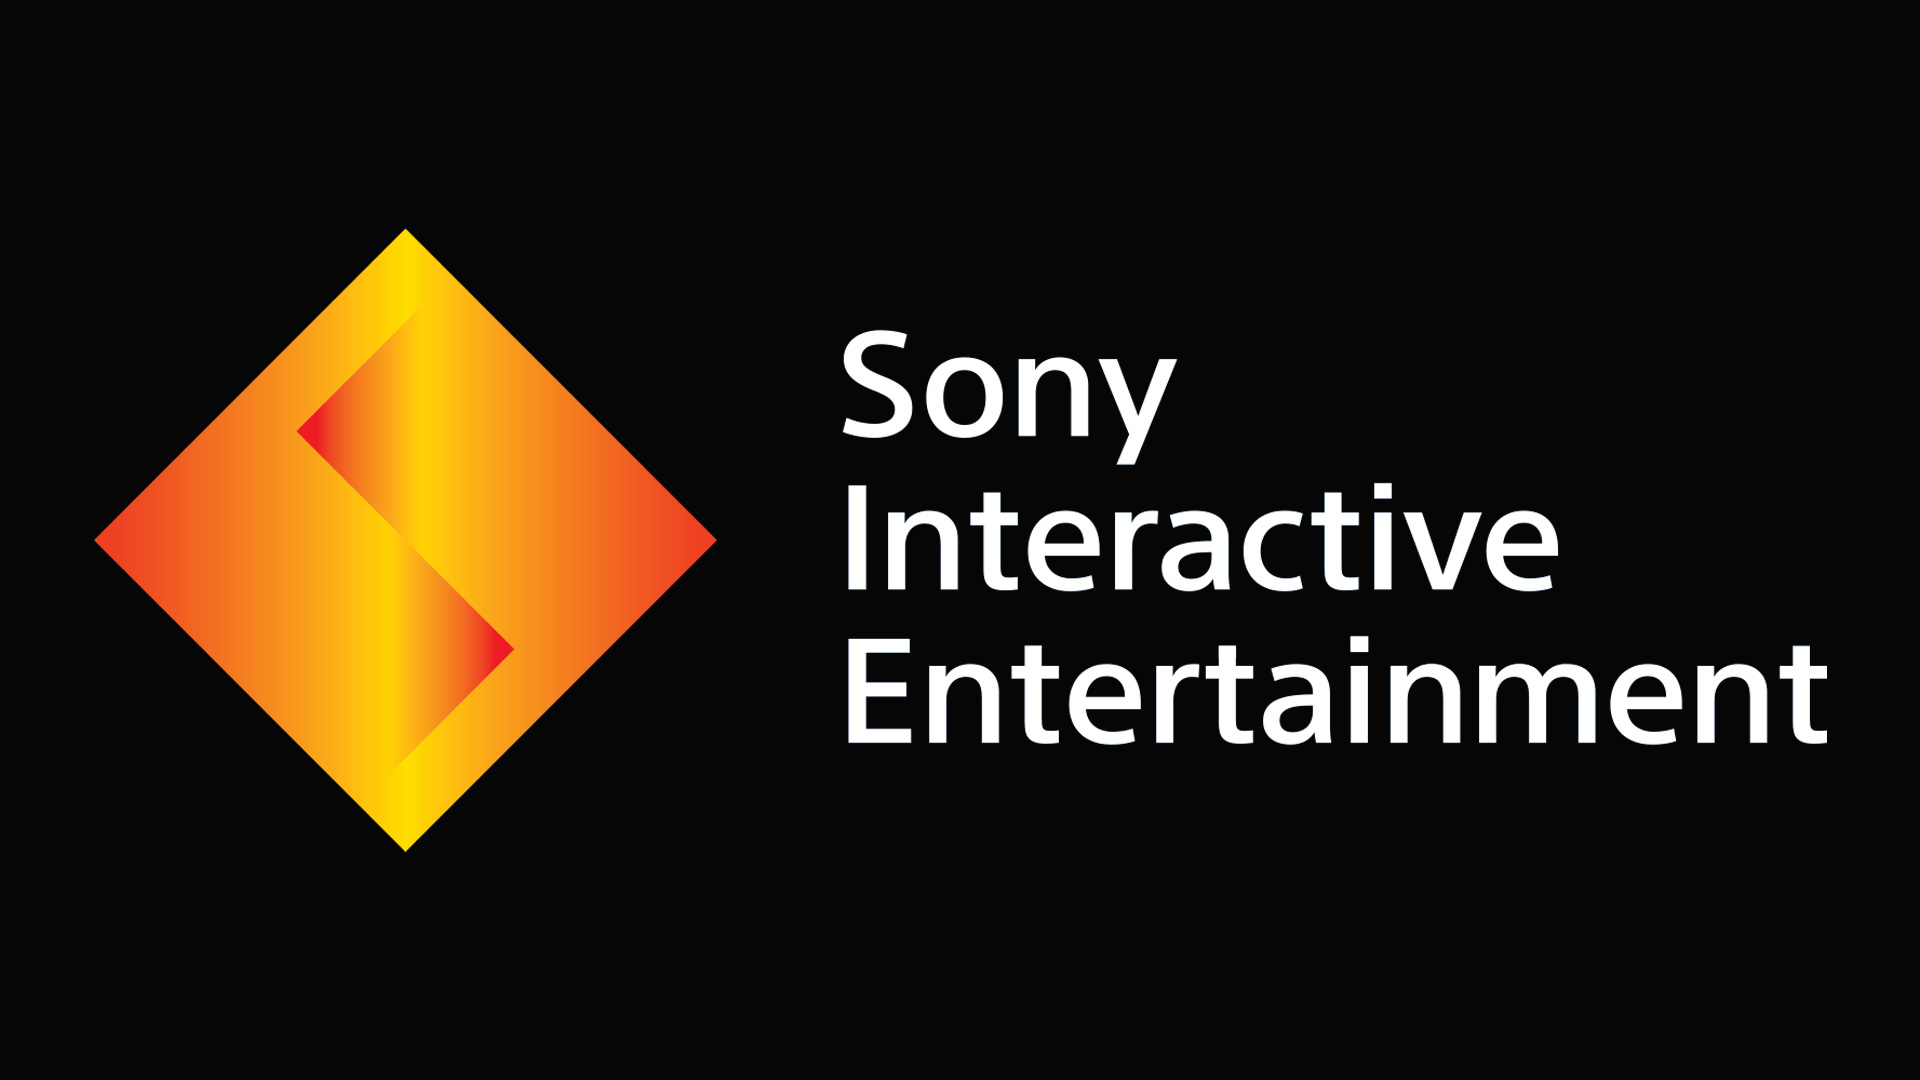 Sony Interactive Entertainment logo